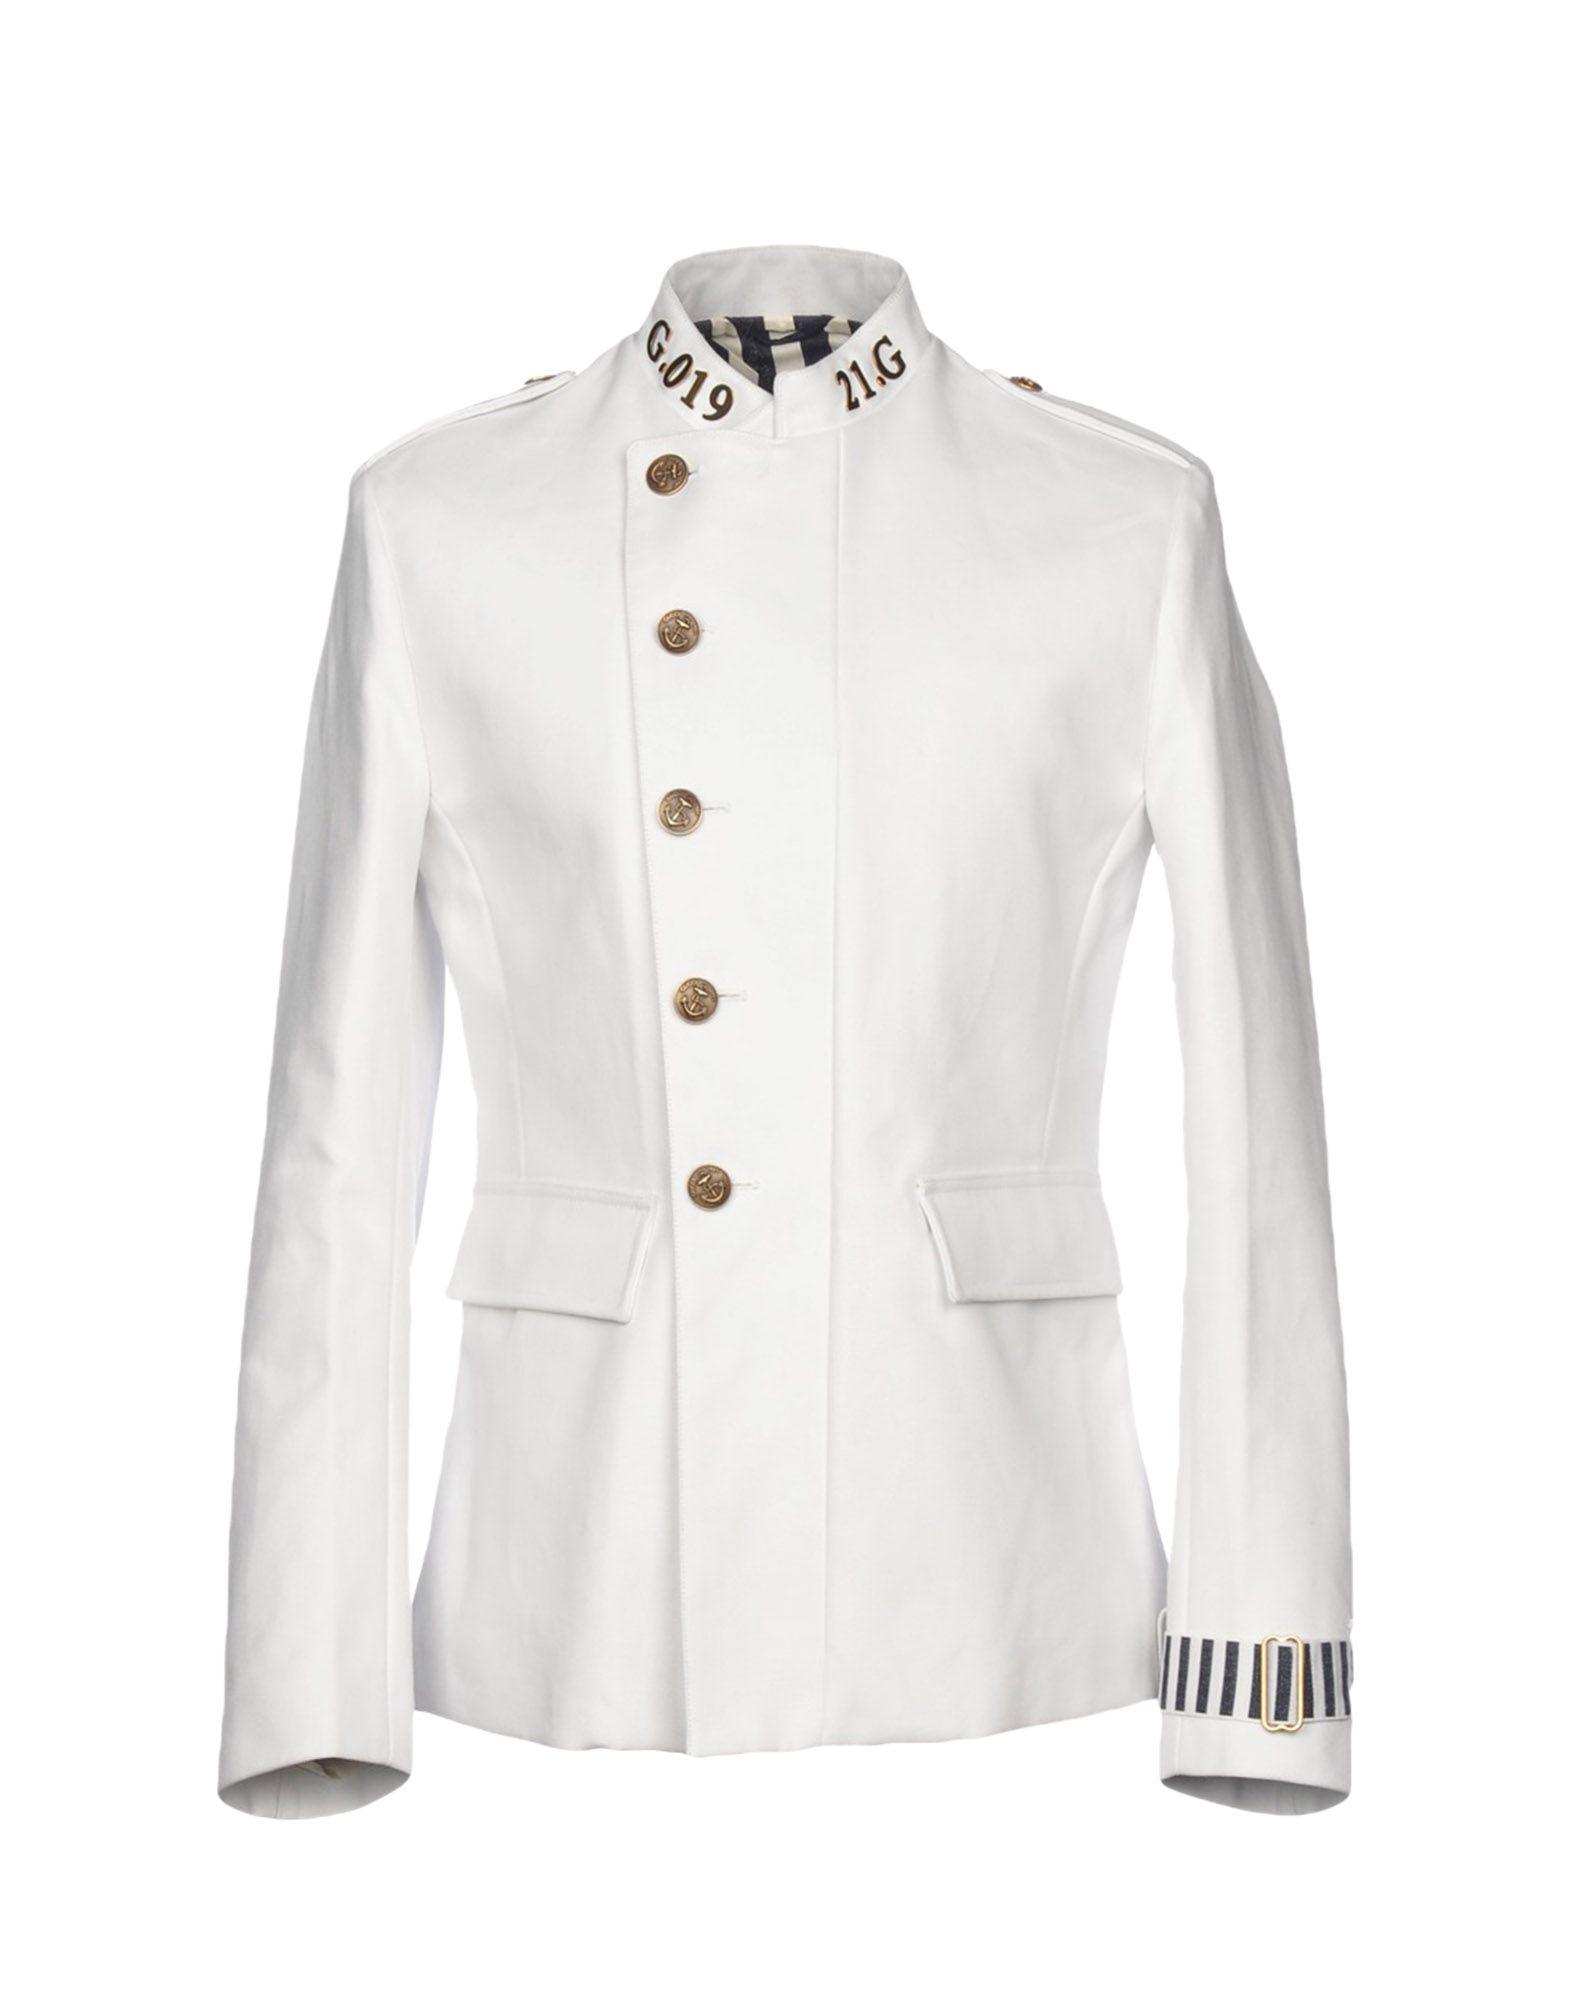 Gucci Cotton Blazer in White for Men - Lyst